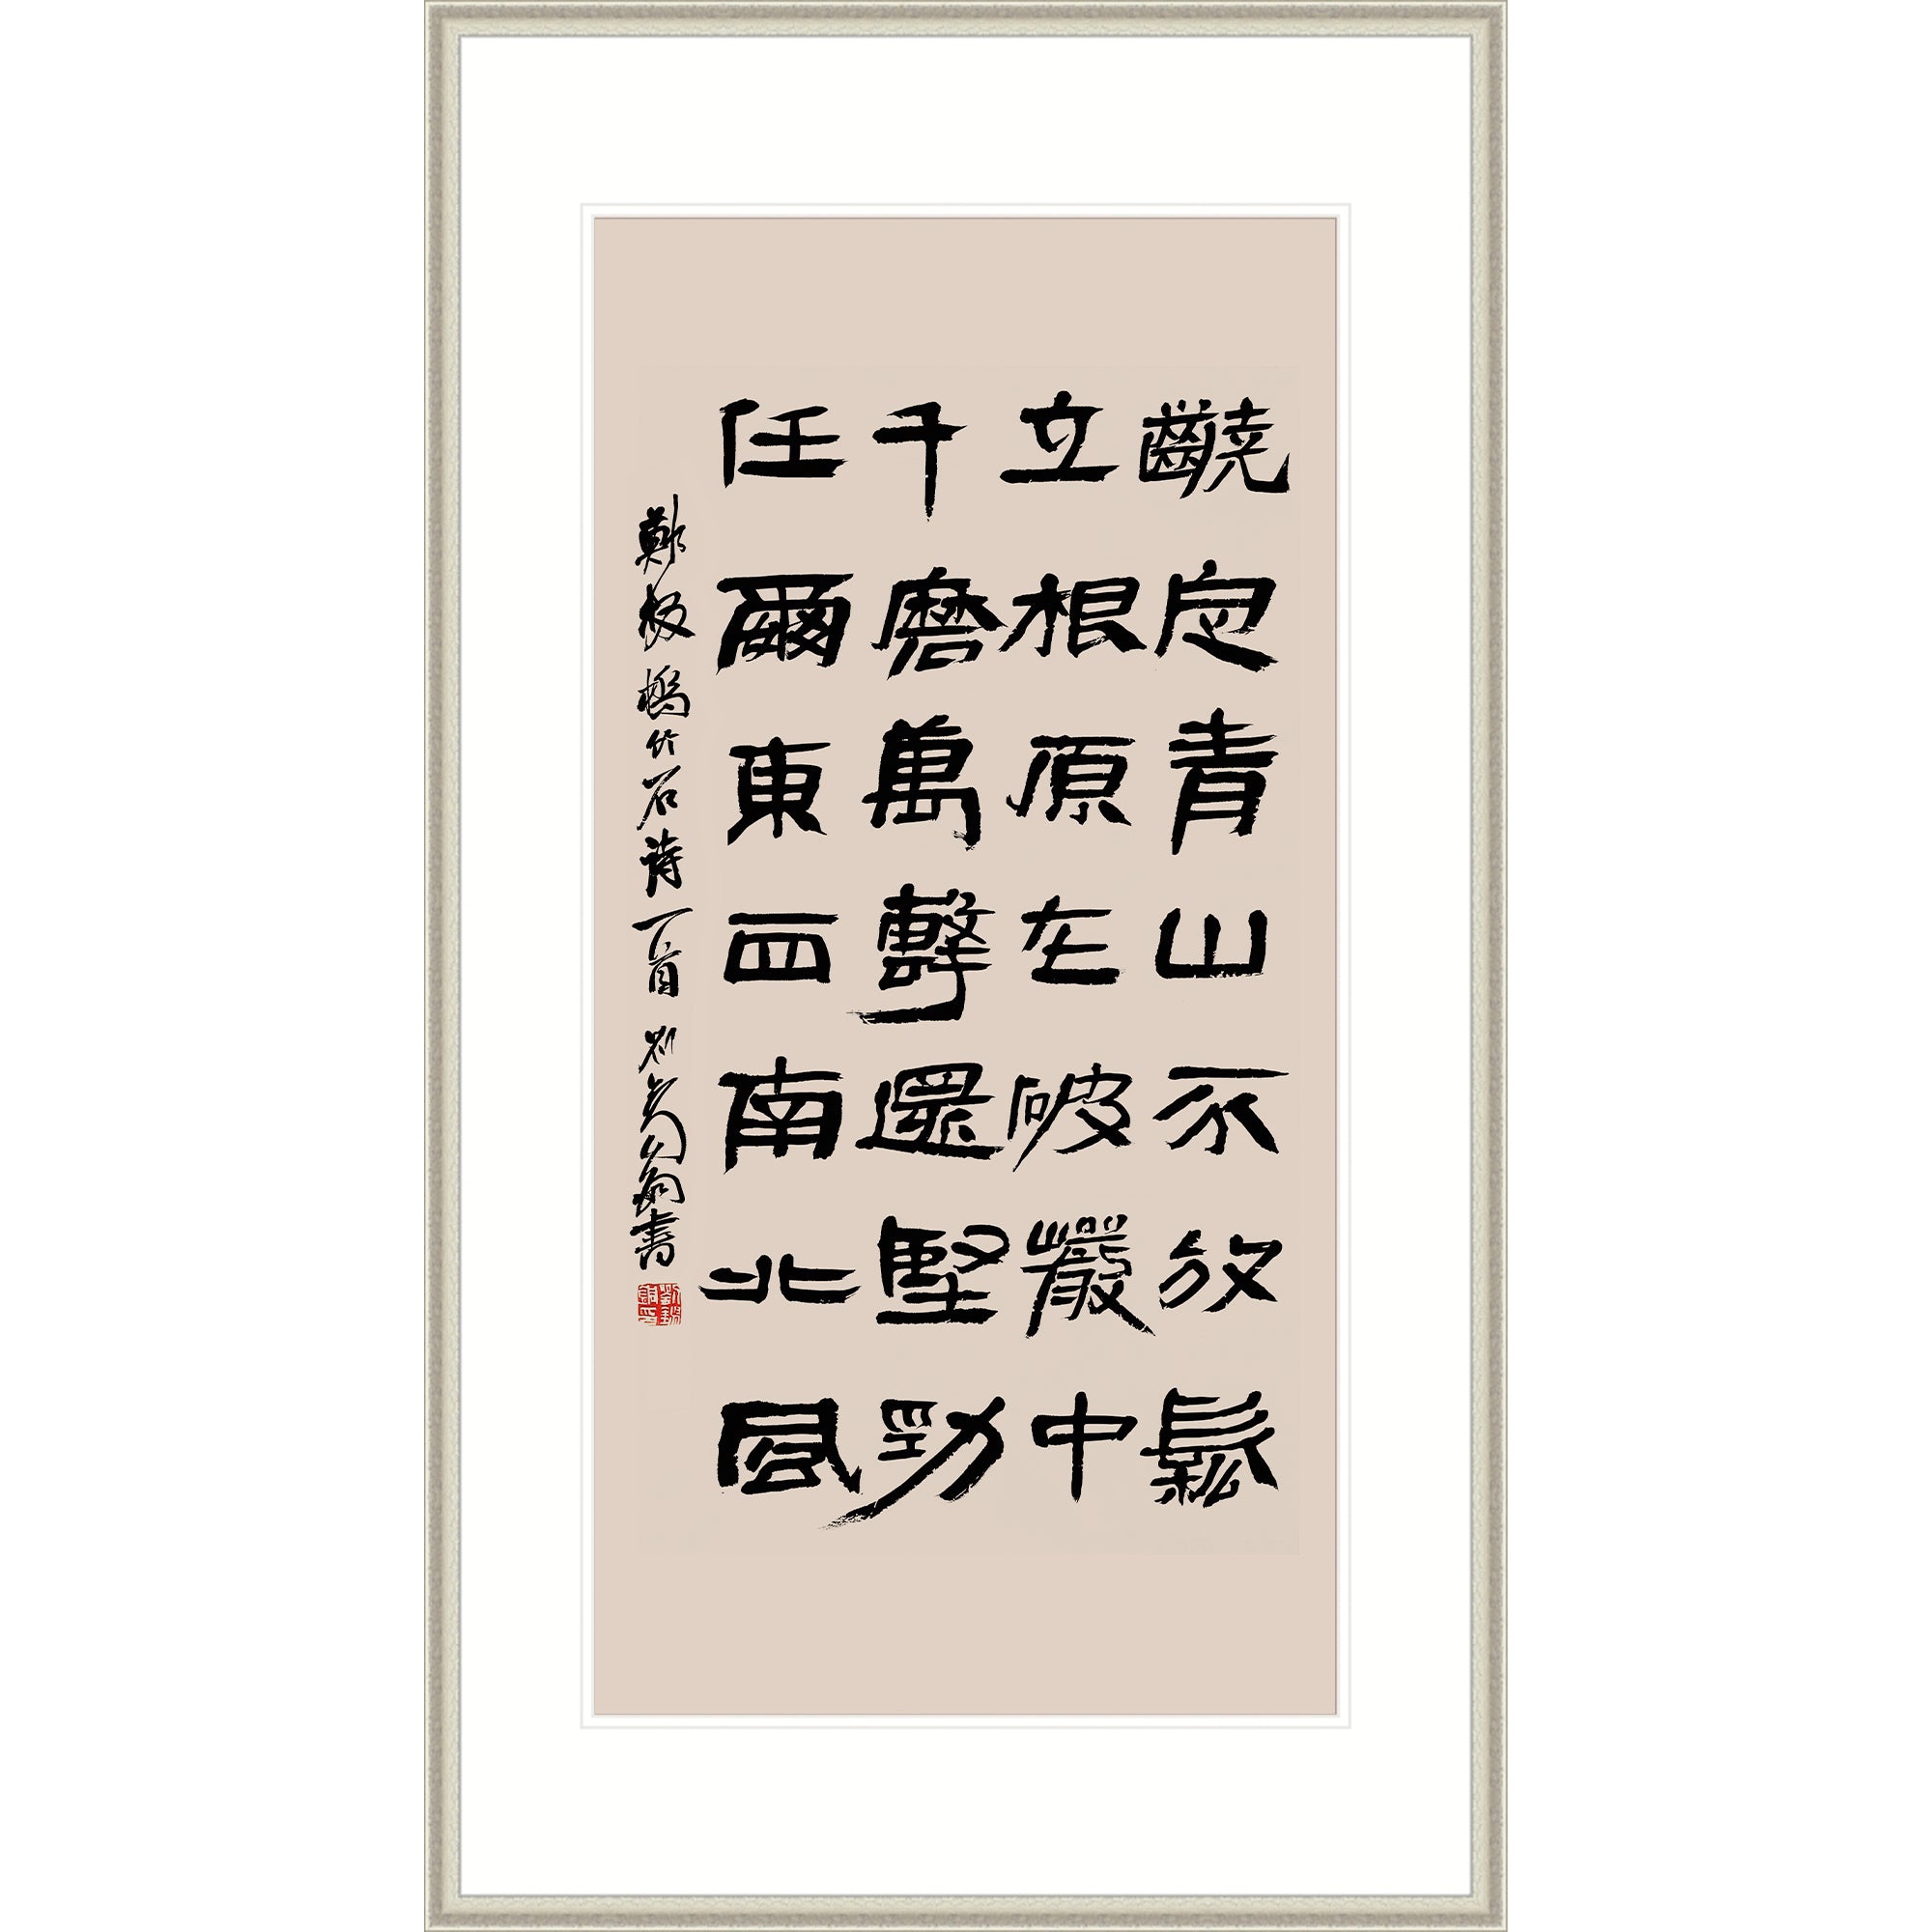 Bamboo Poem by Zheng Banqiao